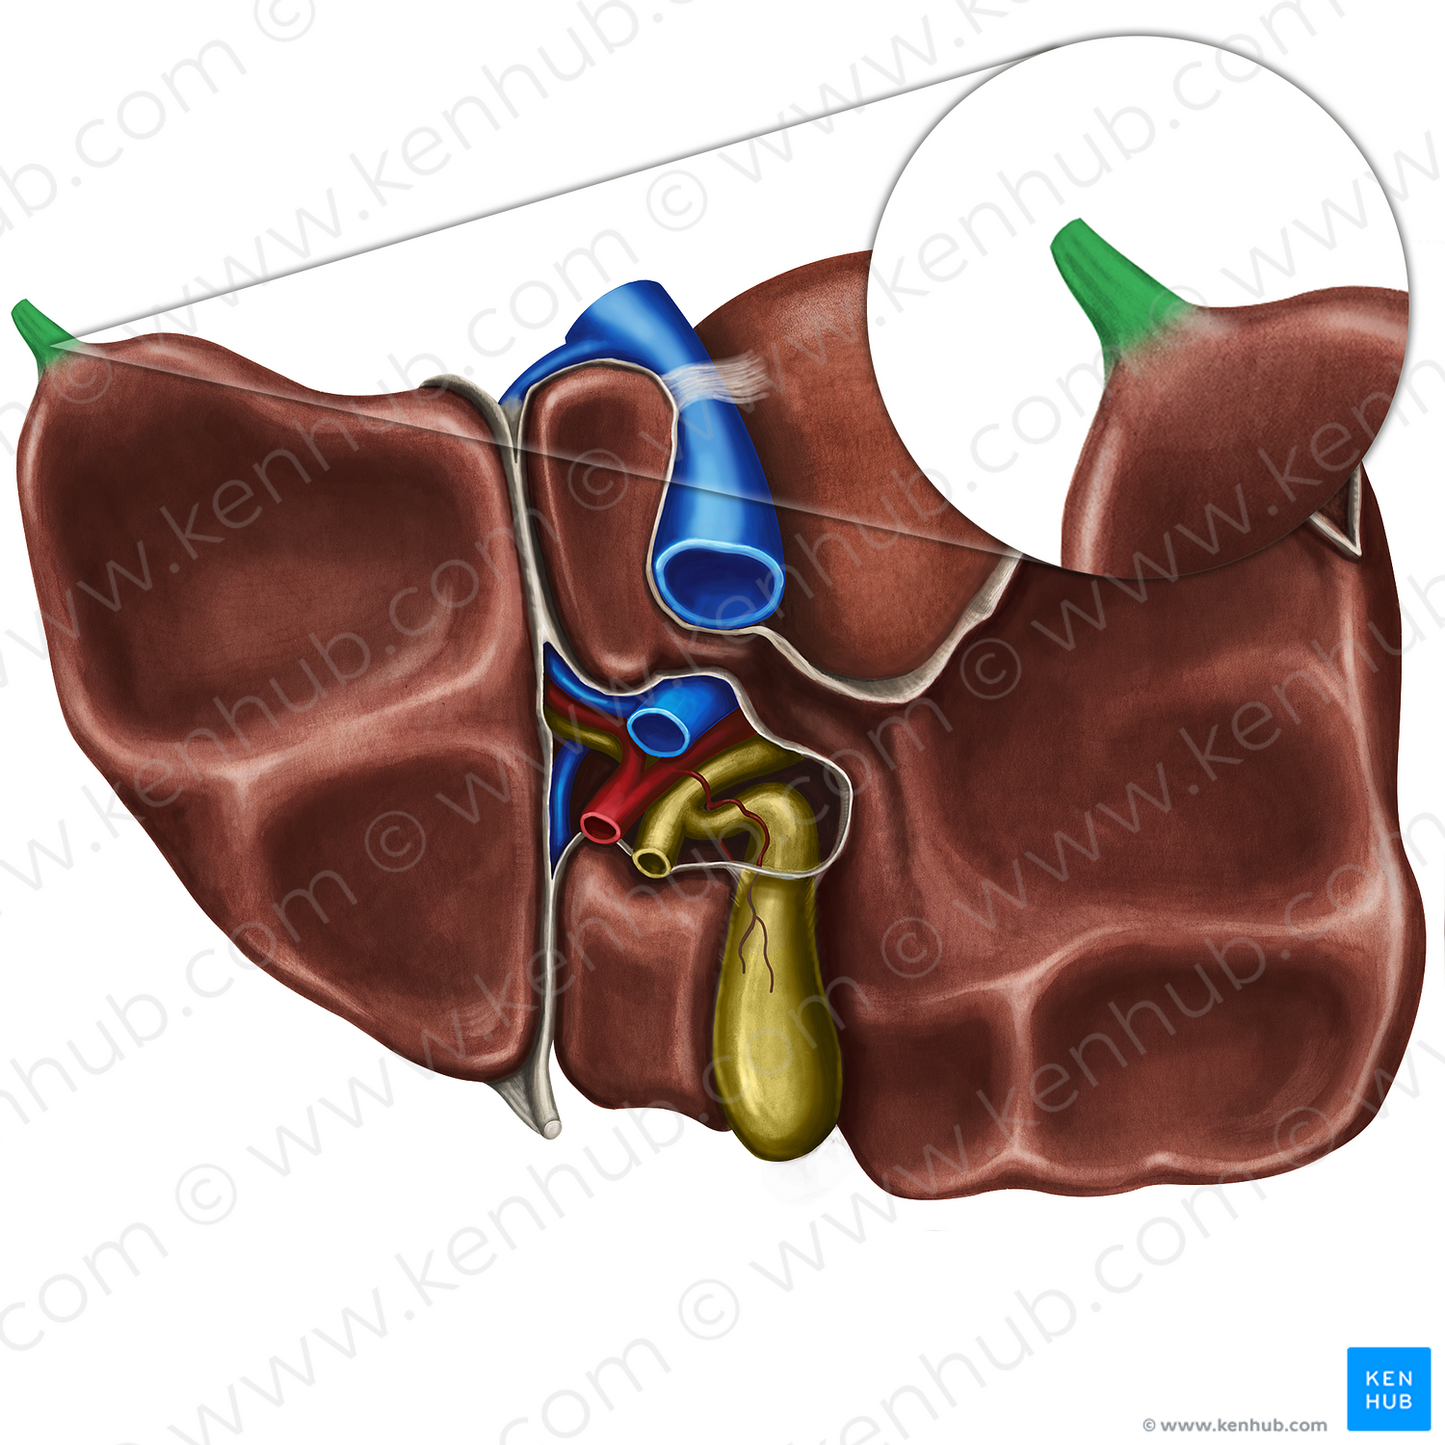 Fibrous appendix of liver (#794)